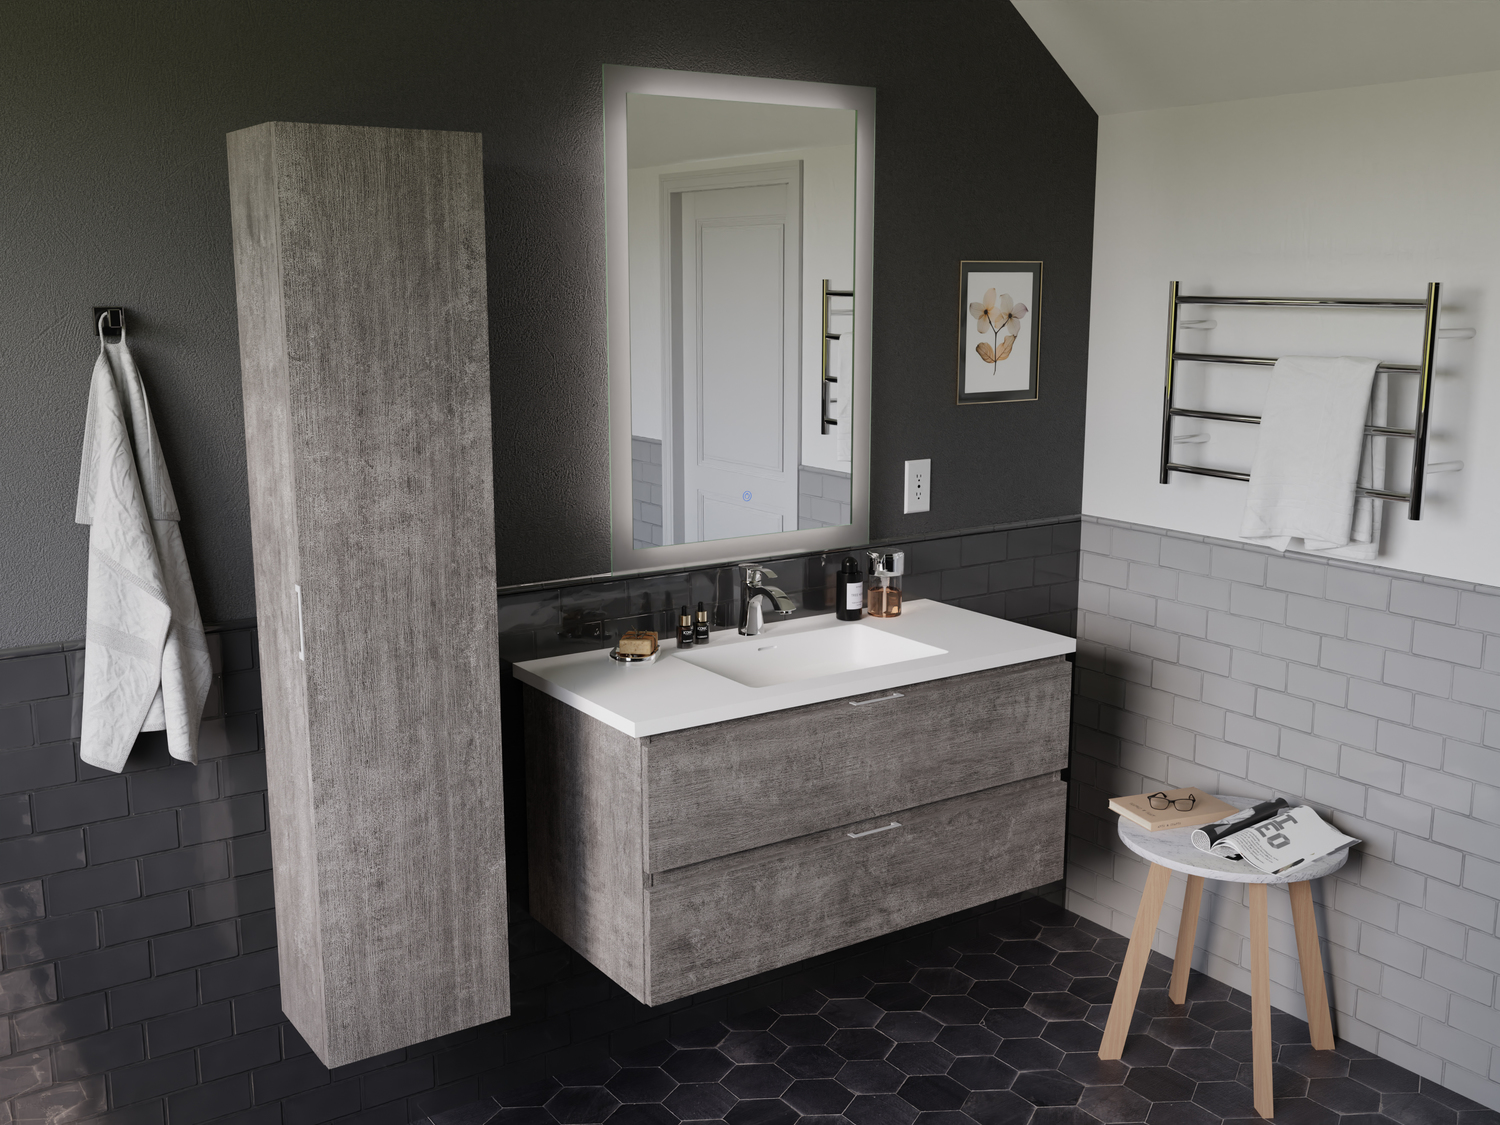 farmhouse bathroom vanity 30 inch Anzzi BATHROOM - Vanities - Vanity Sets Gray